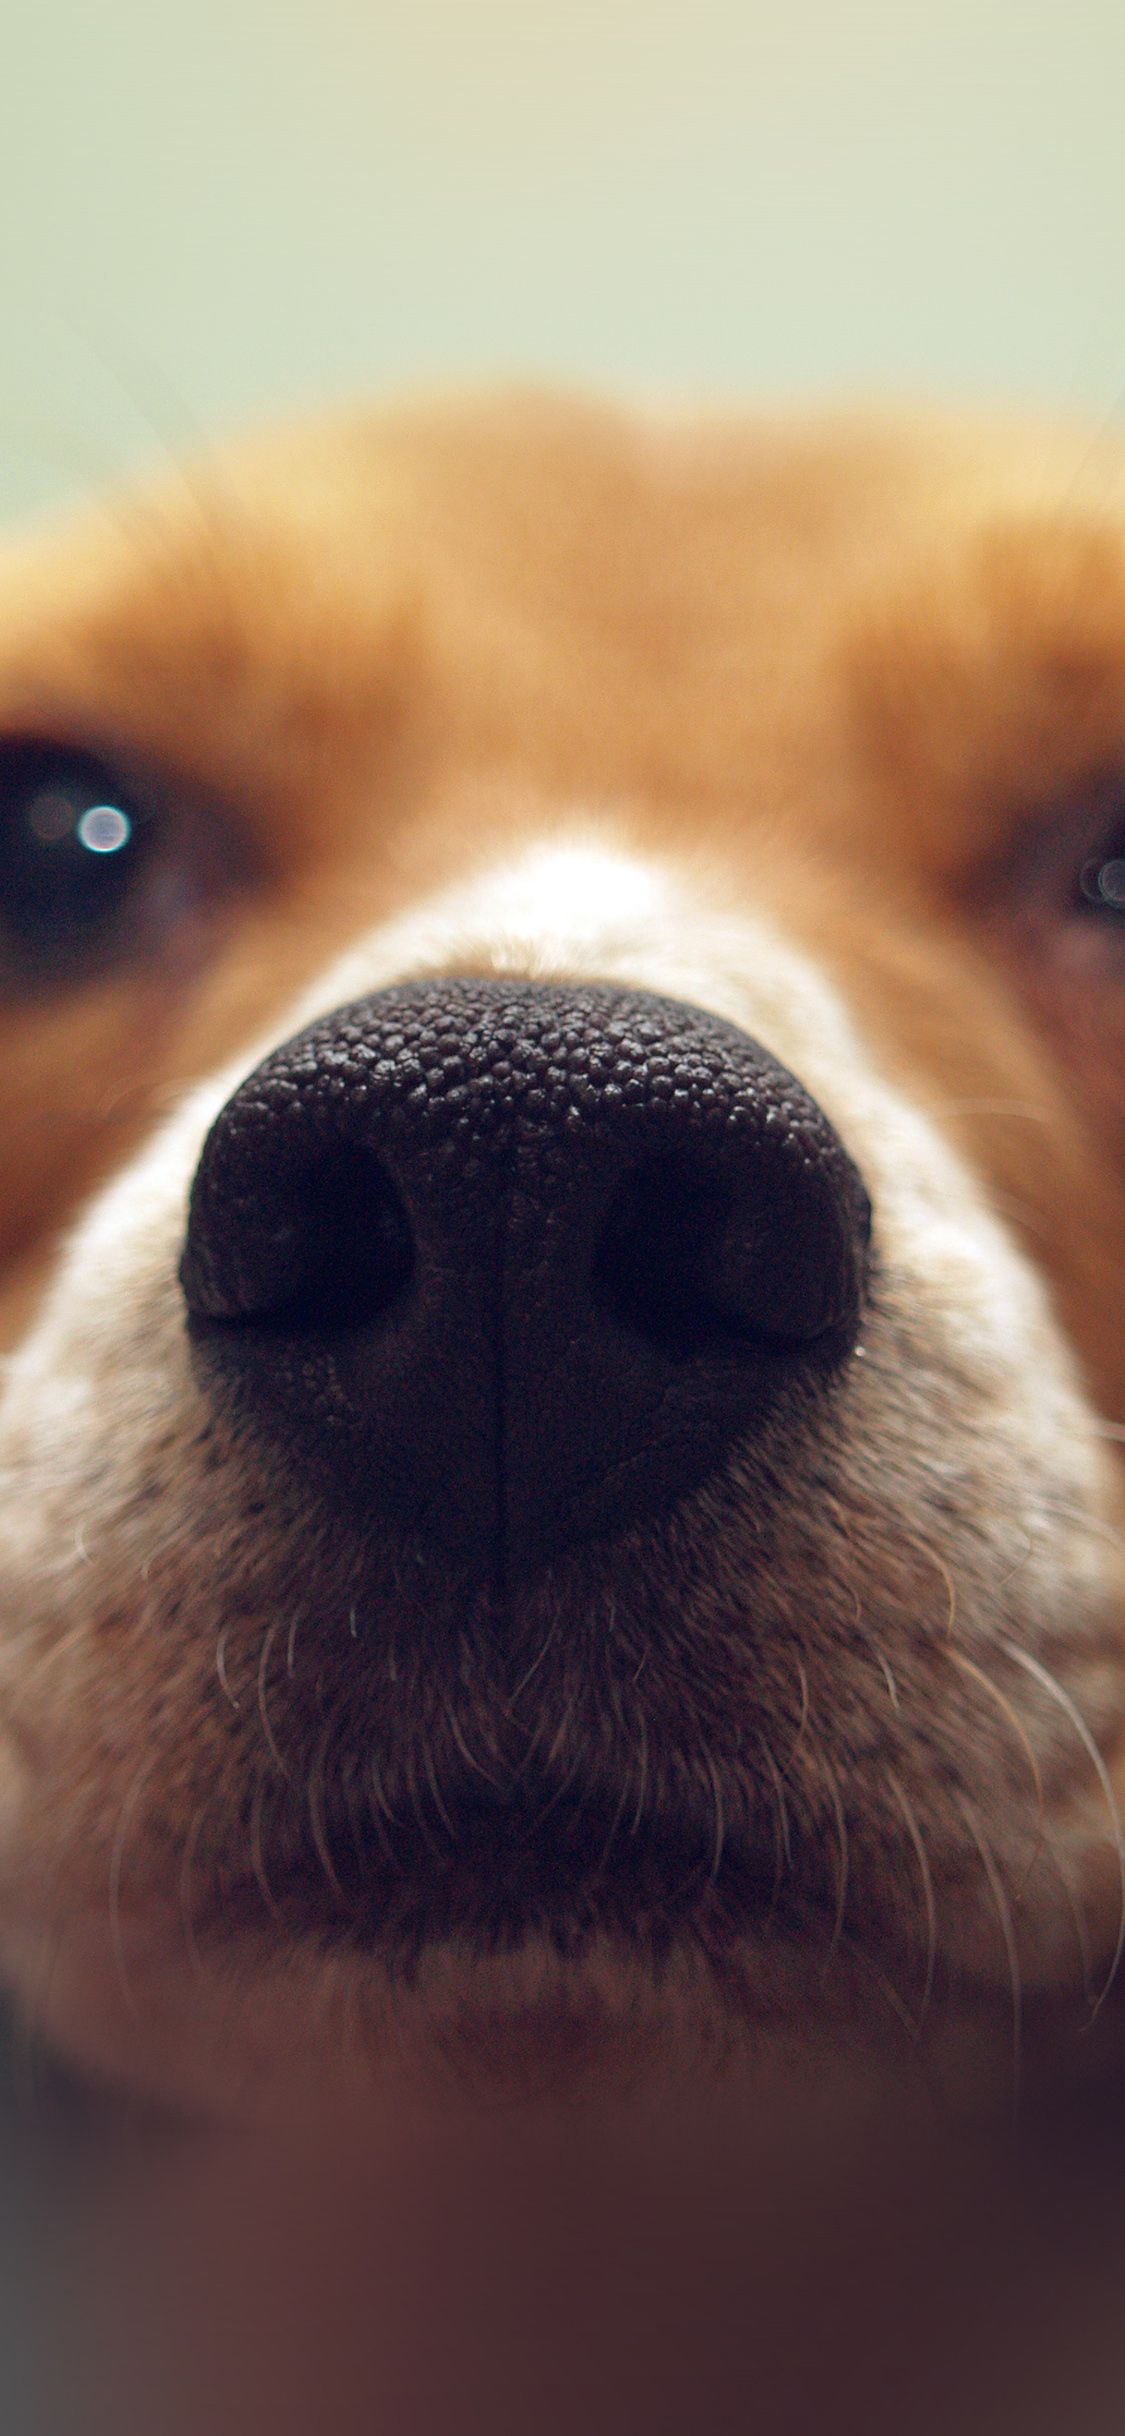 iPhone X wallpaper. cute dog animal face